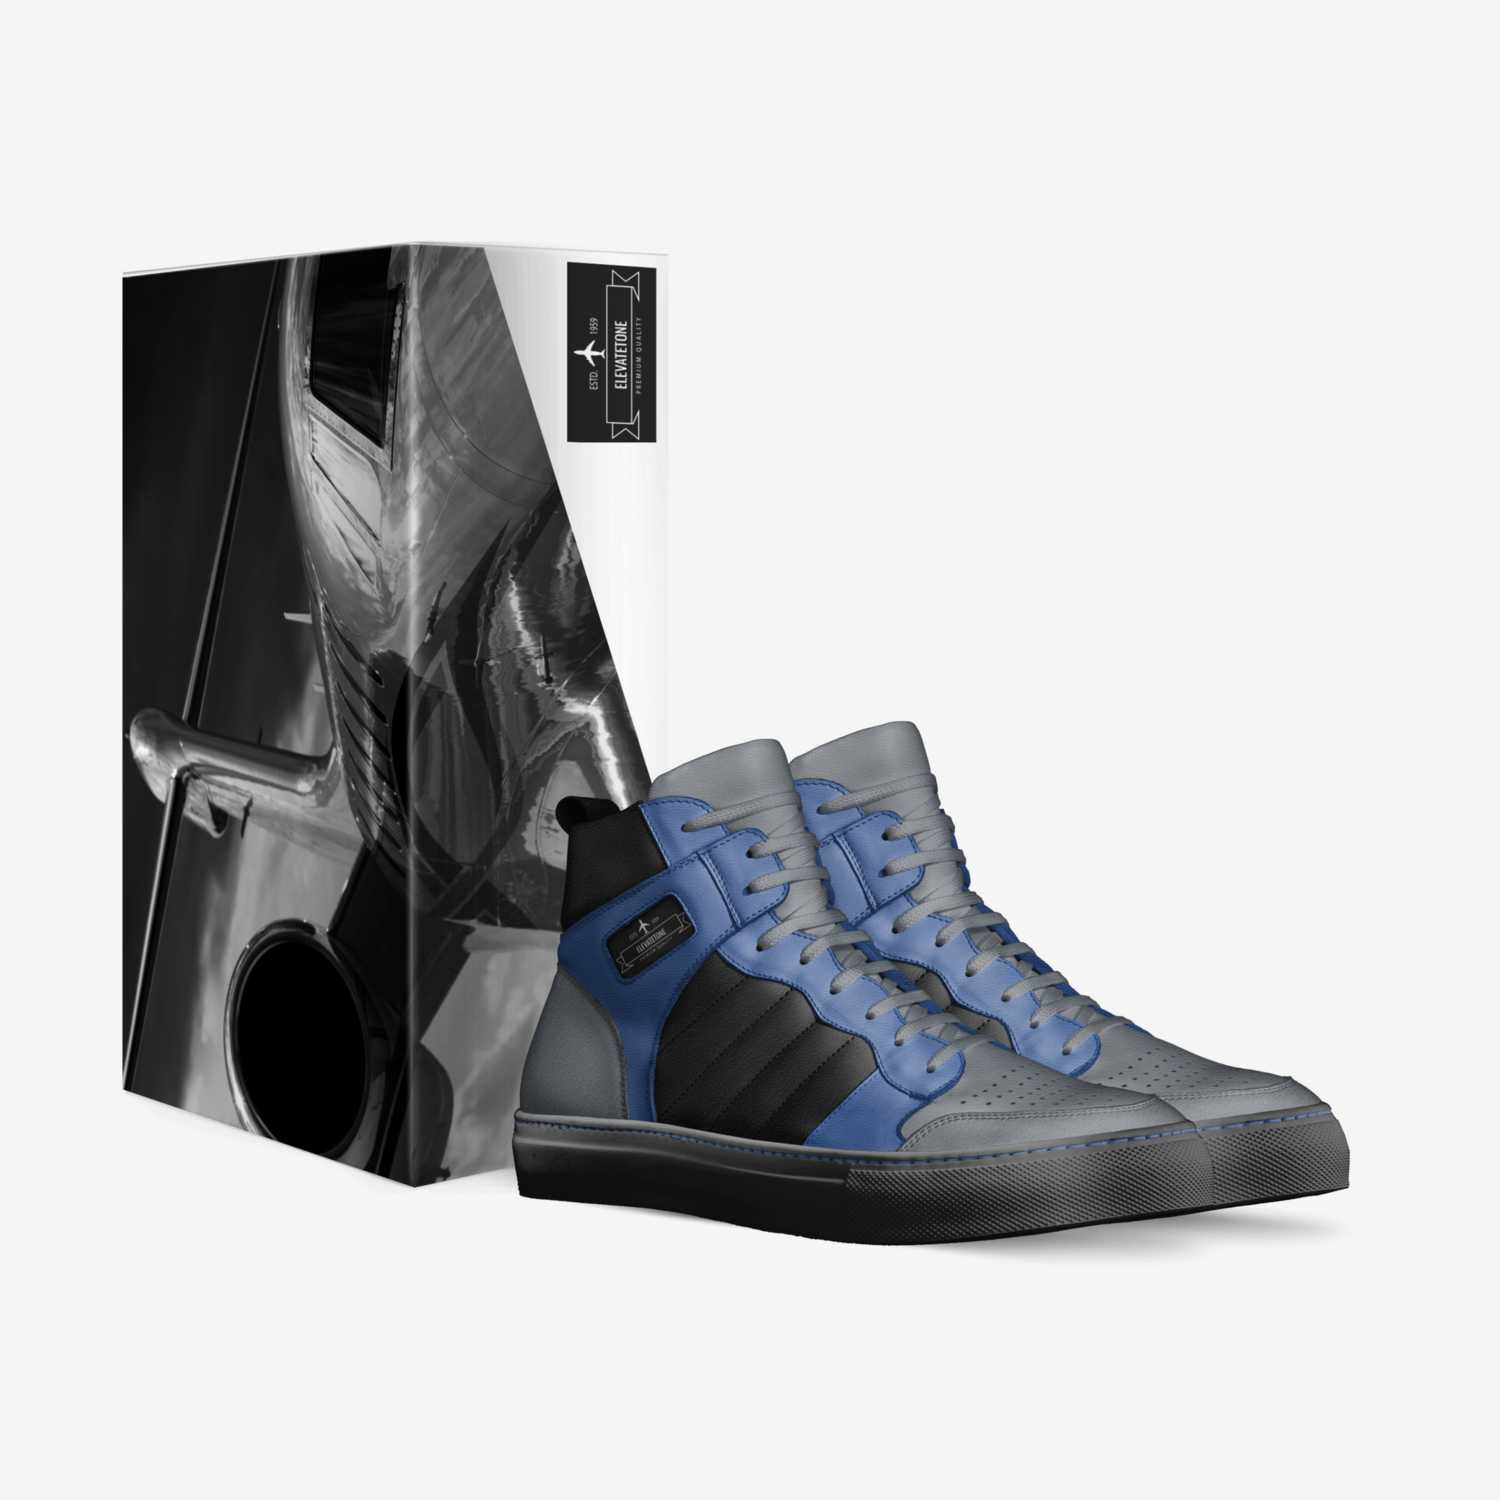 ElevateTone custom made in Italy shoes by Tony | Box view